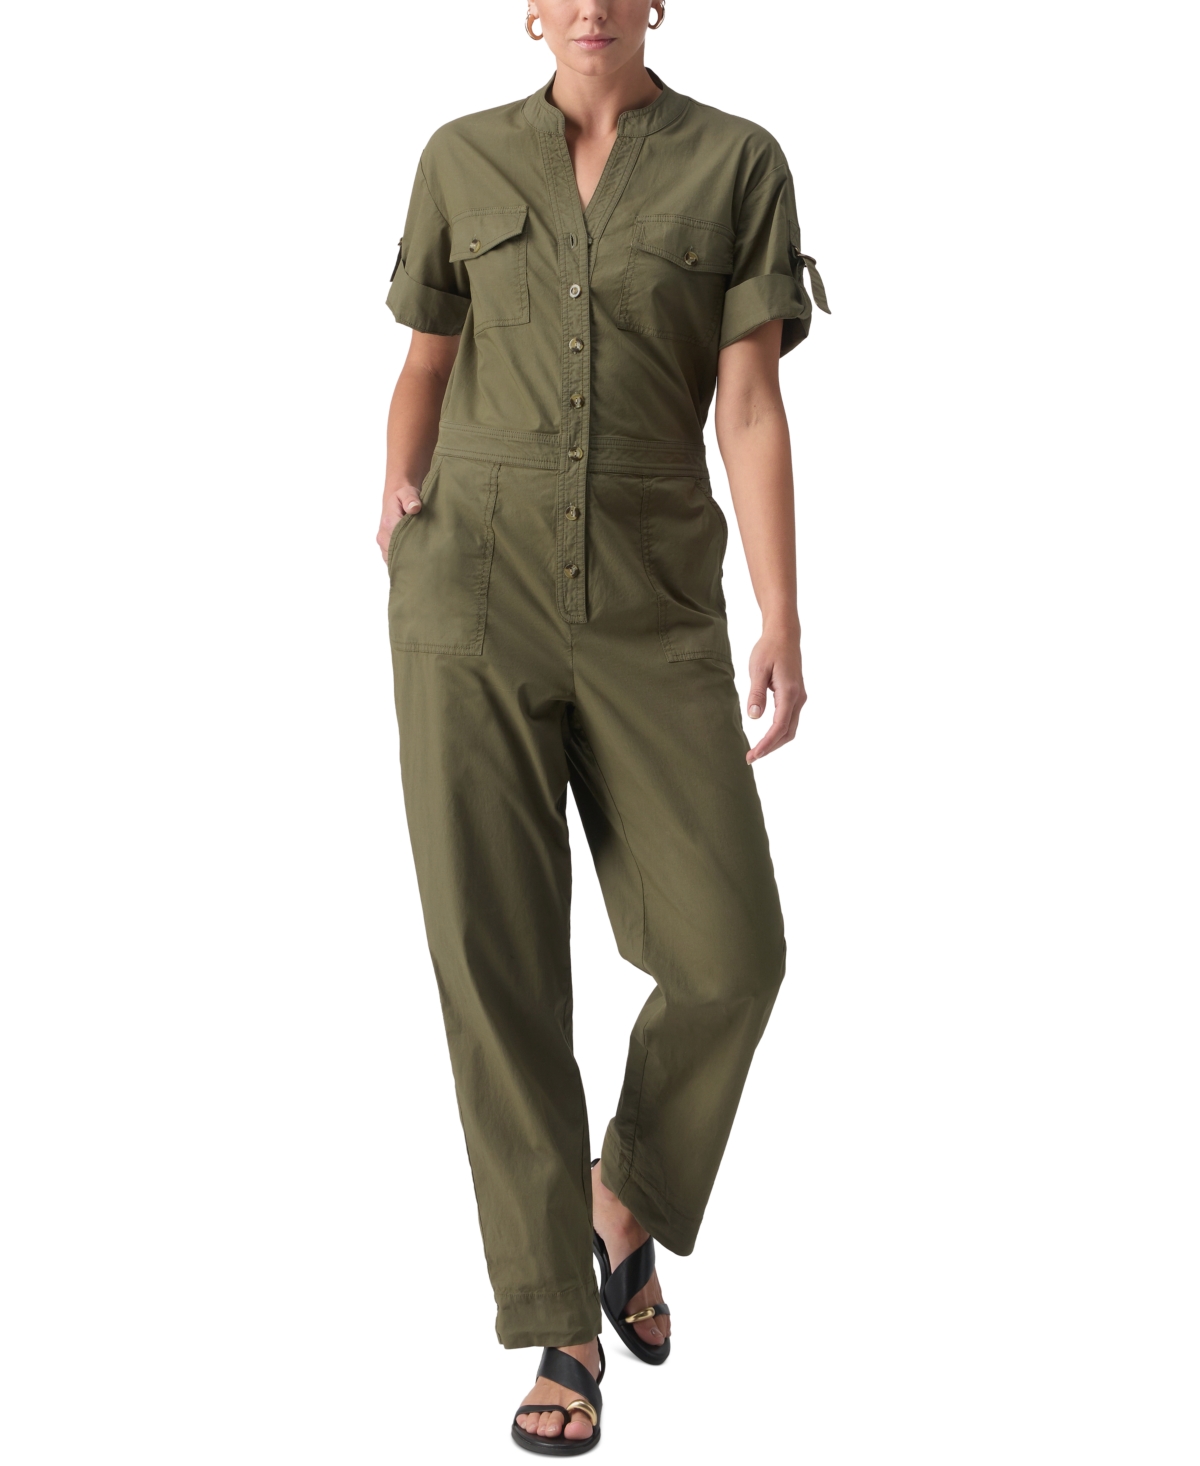 Women's Reserve Short-Sleeve Jumpsuit - Burnt Olive